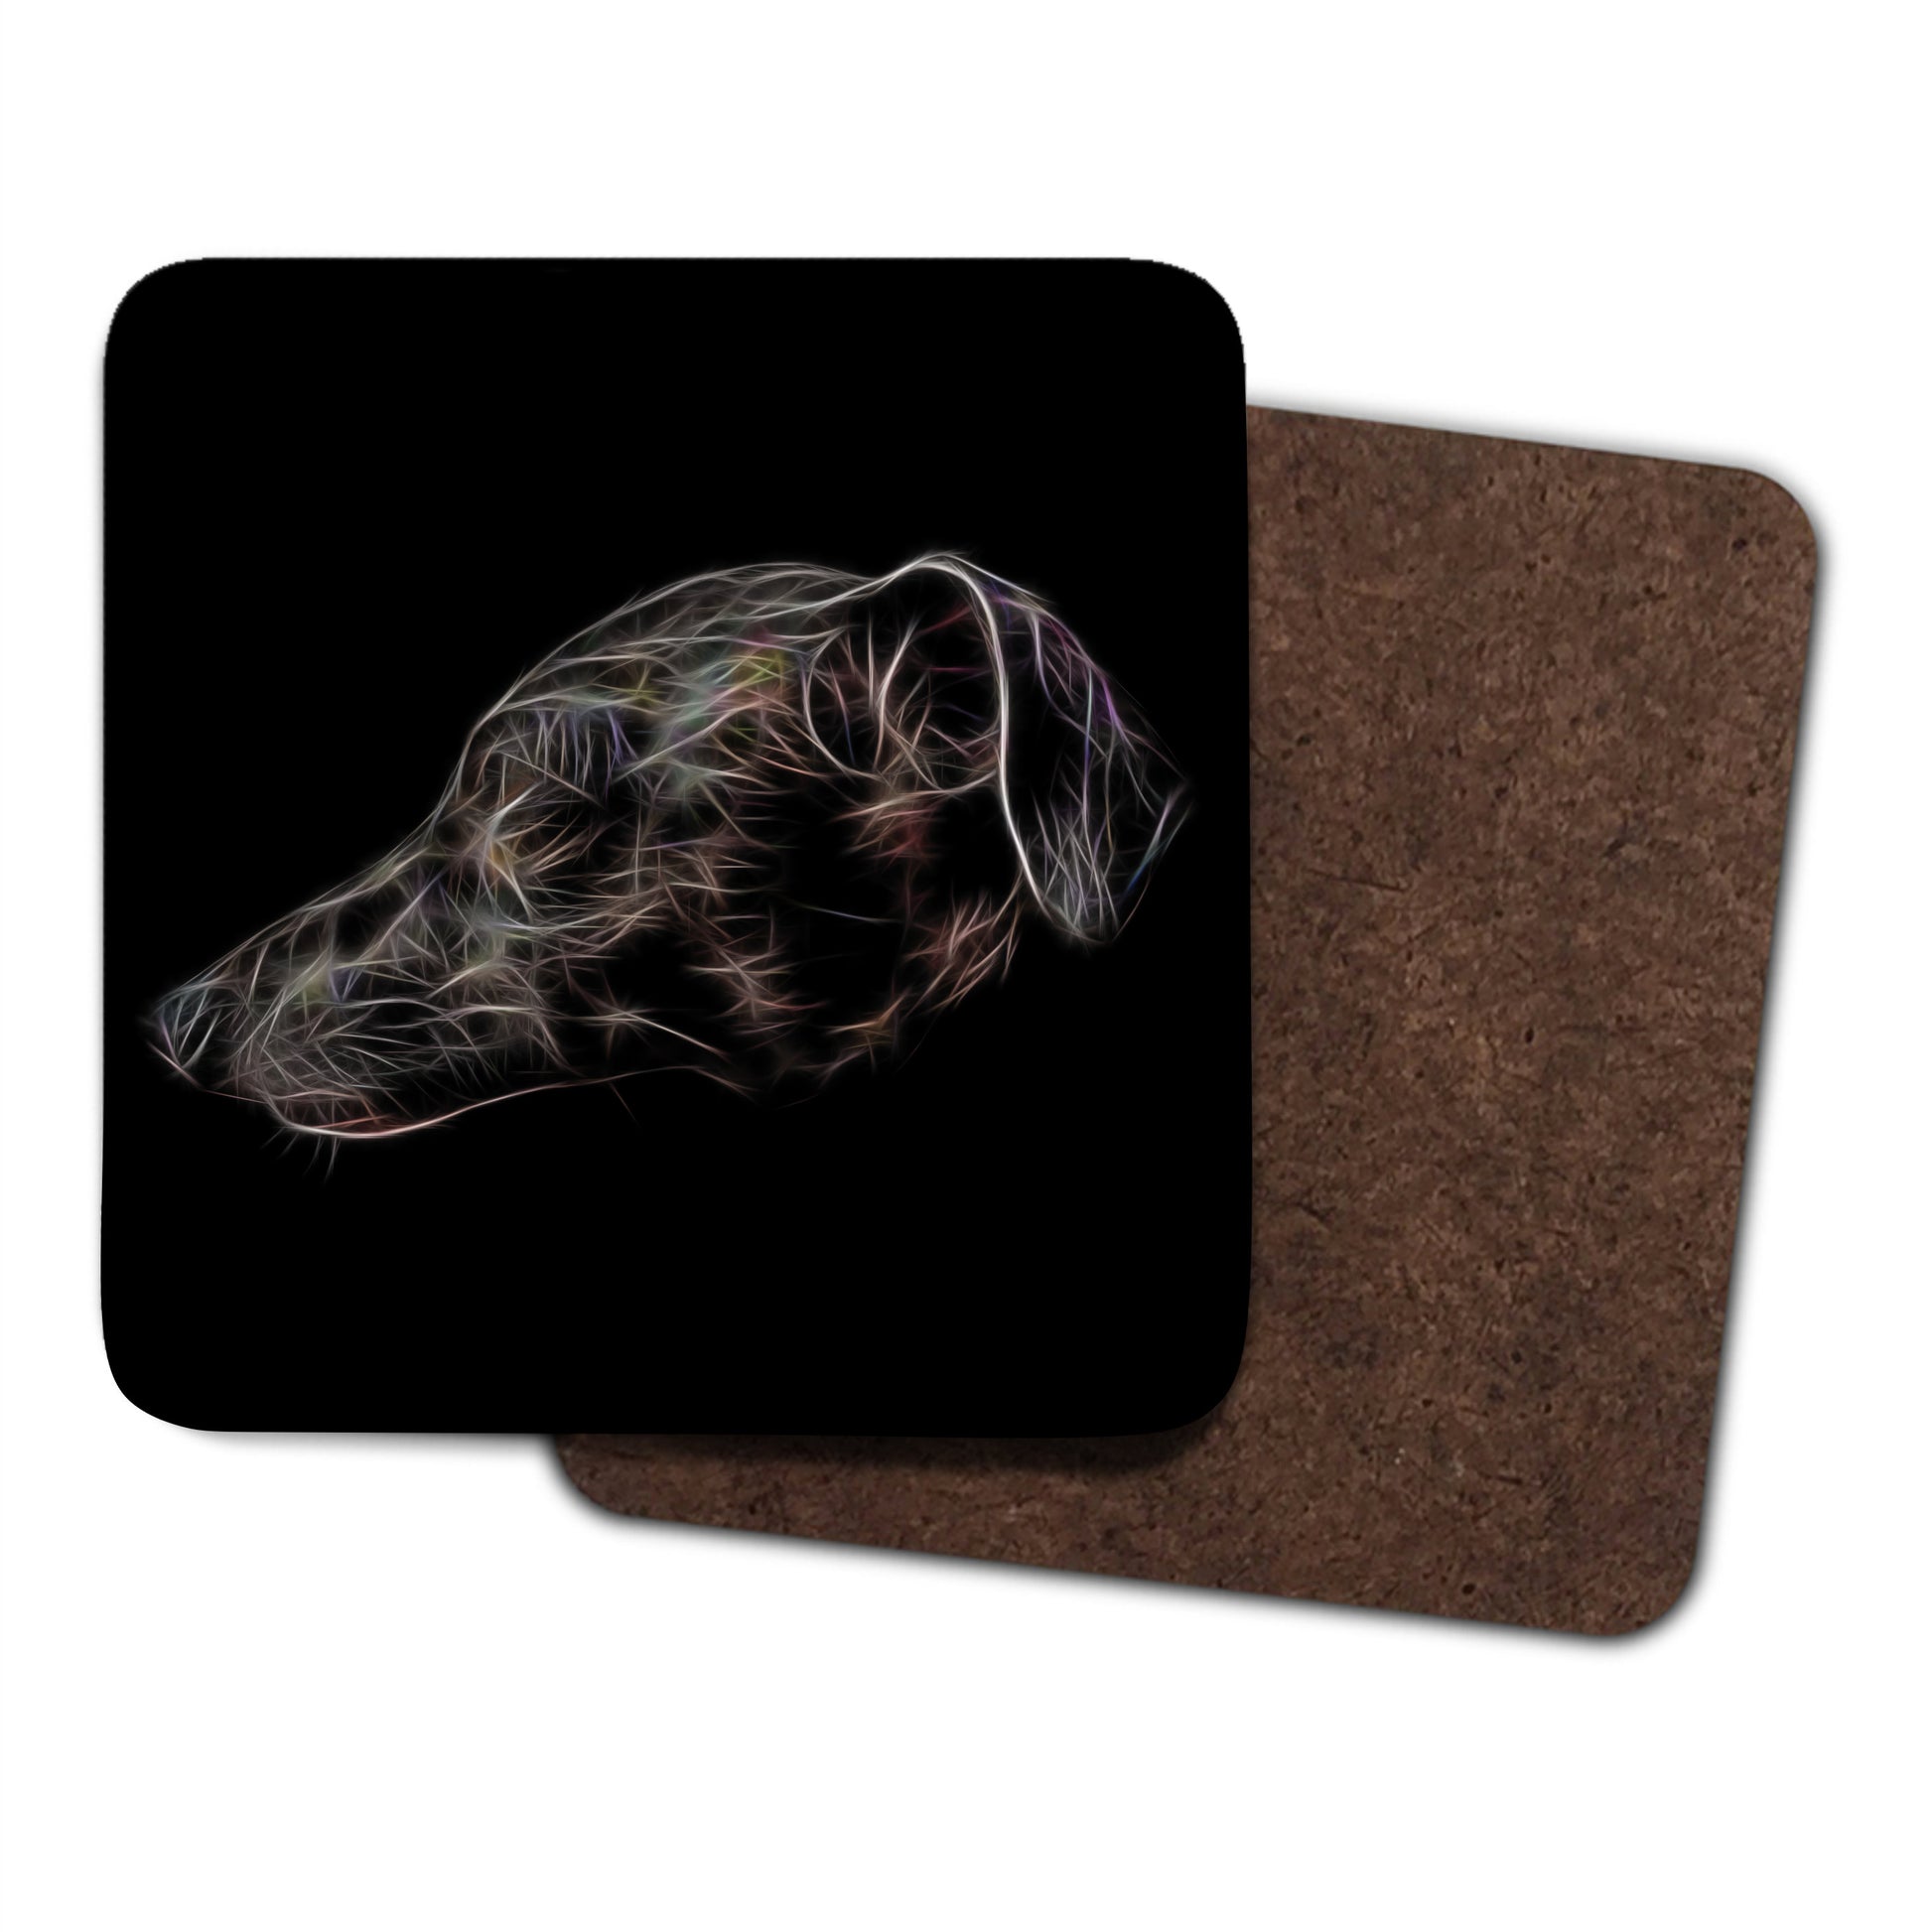 Italian Greyhound Coasters, Set of 2, with Stunning Fractal Art Design.